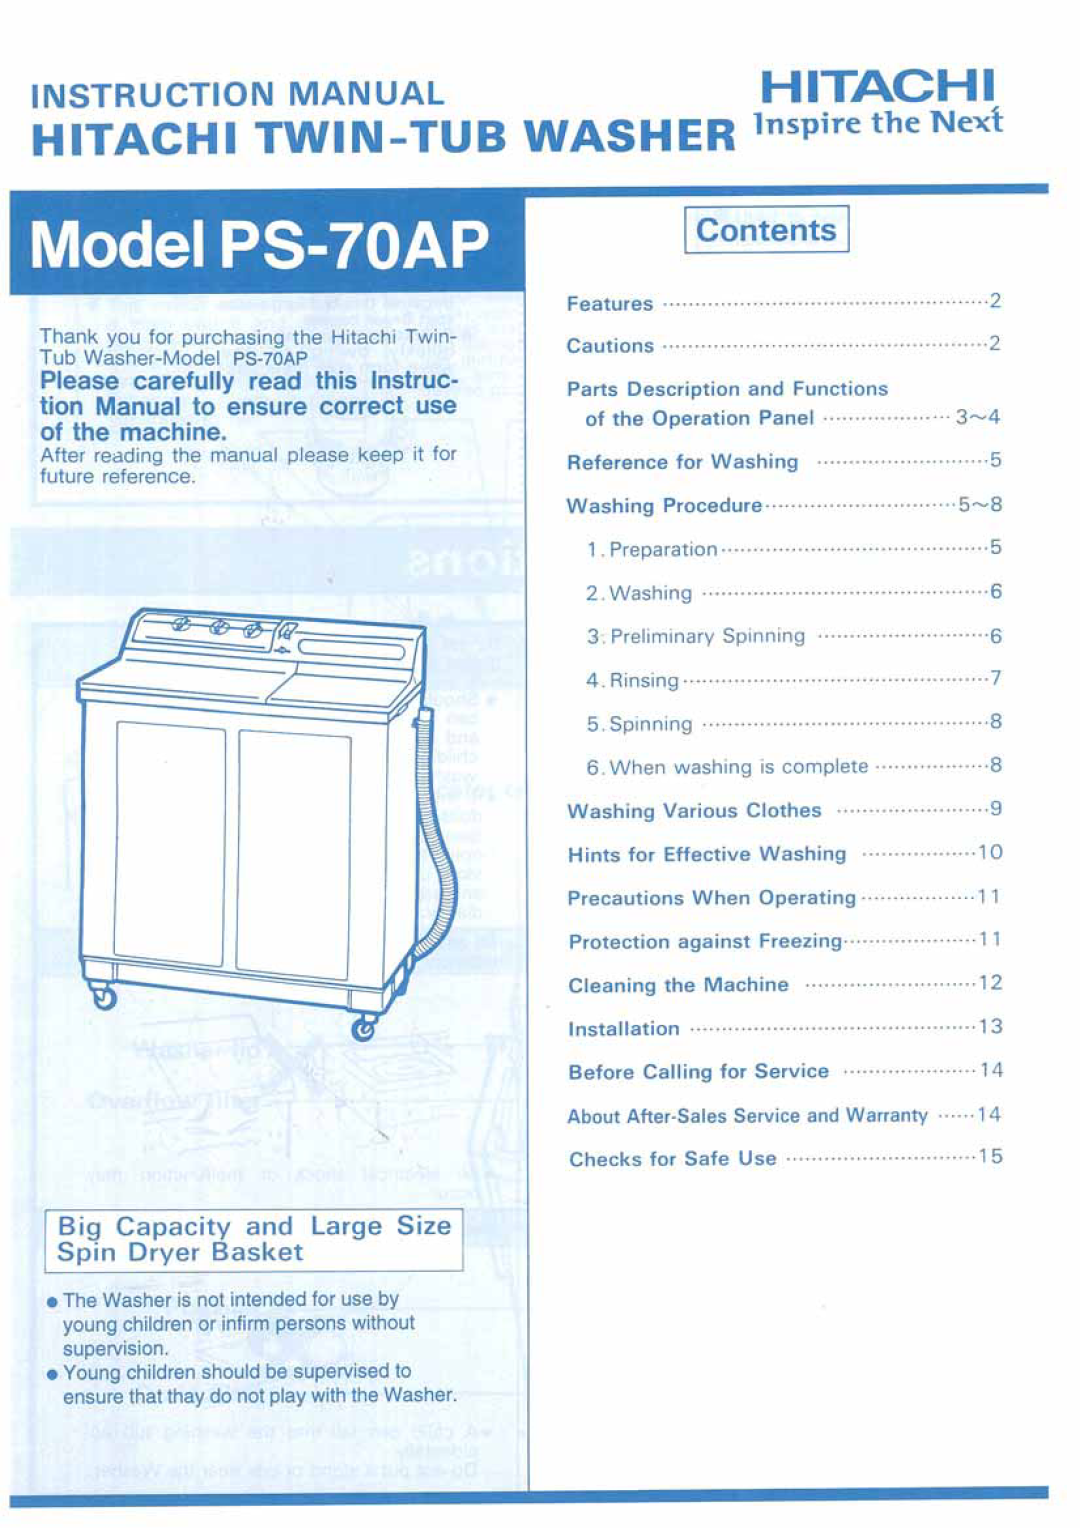 Hitachi PS-70AP manual 